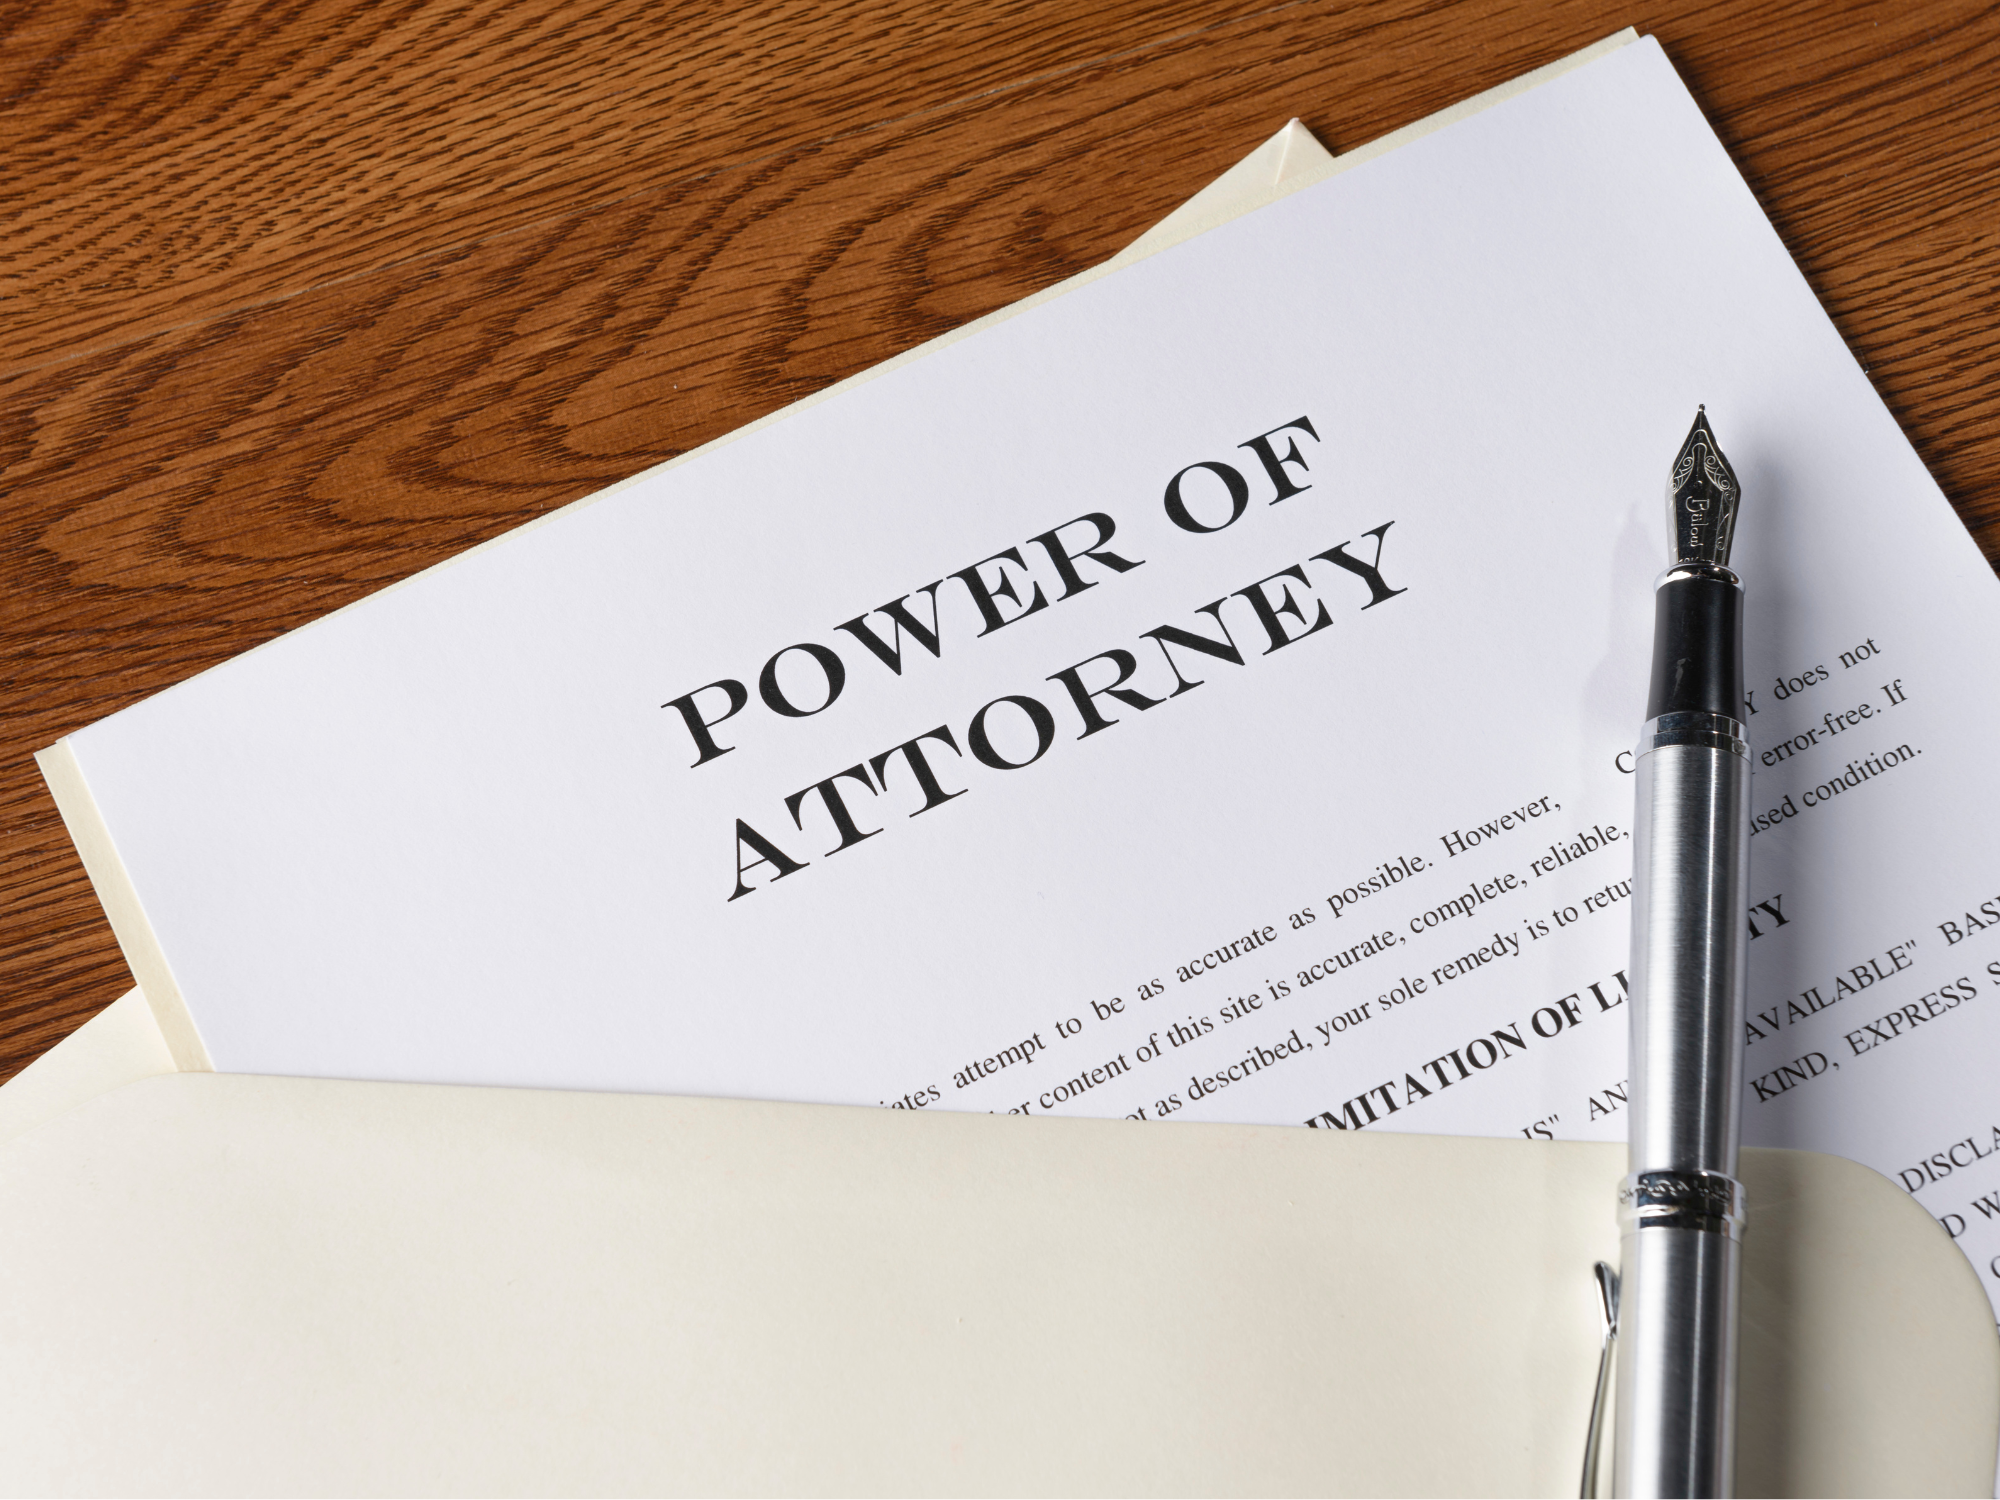 Power of Attorney paperwork